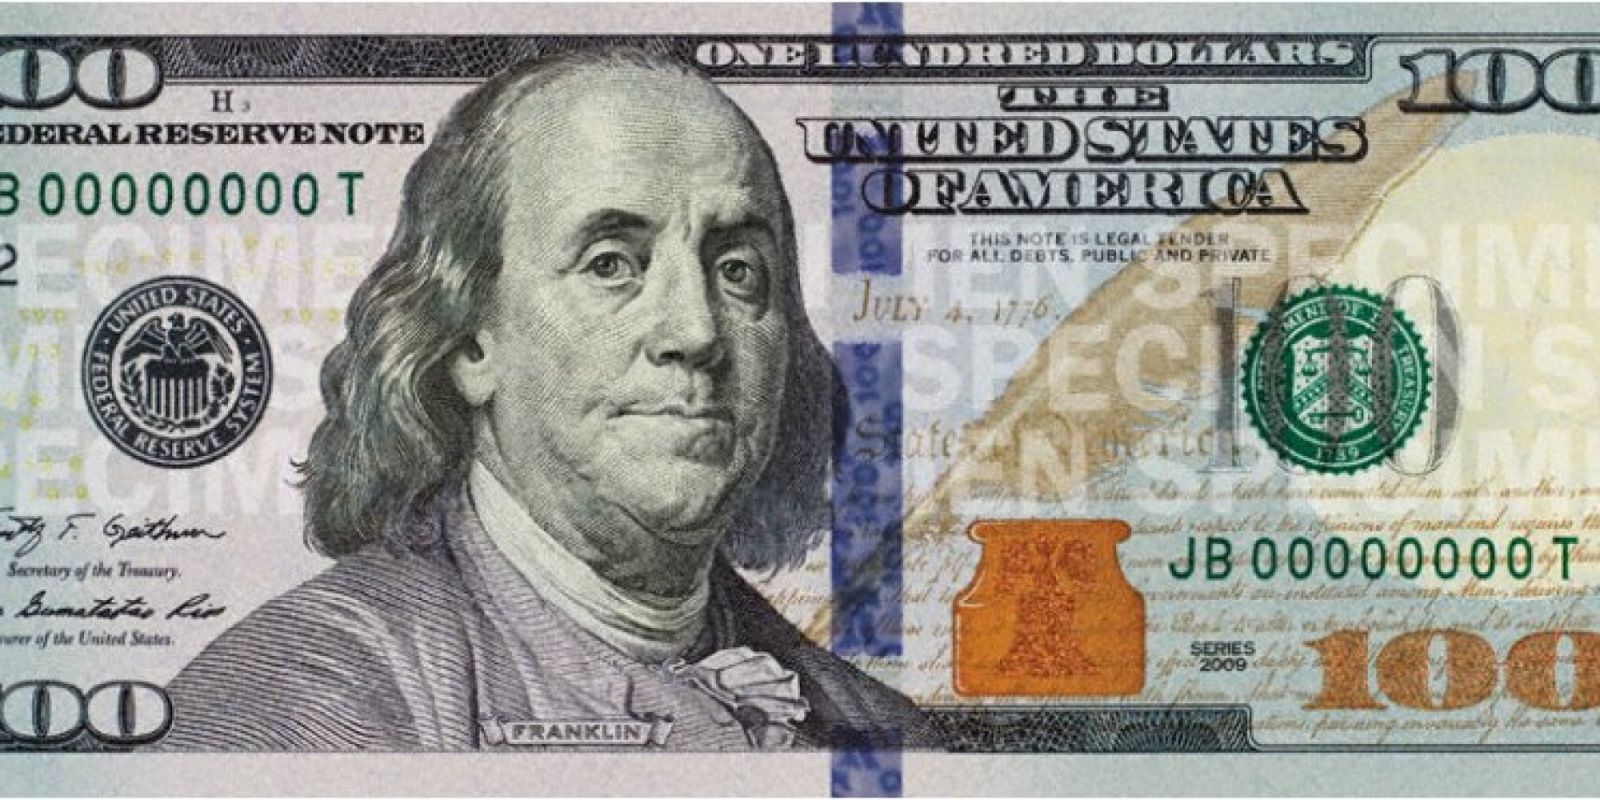  Tờ giấy bạc 100 USD mới rất khó in. Photo courtesy: Fast Company